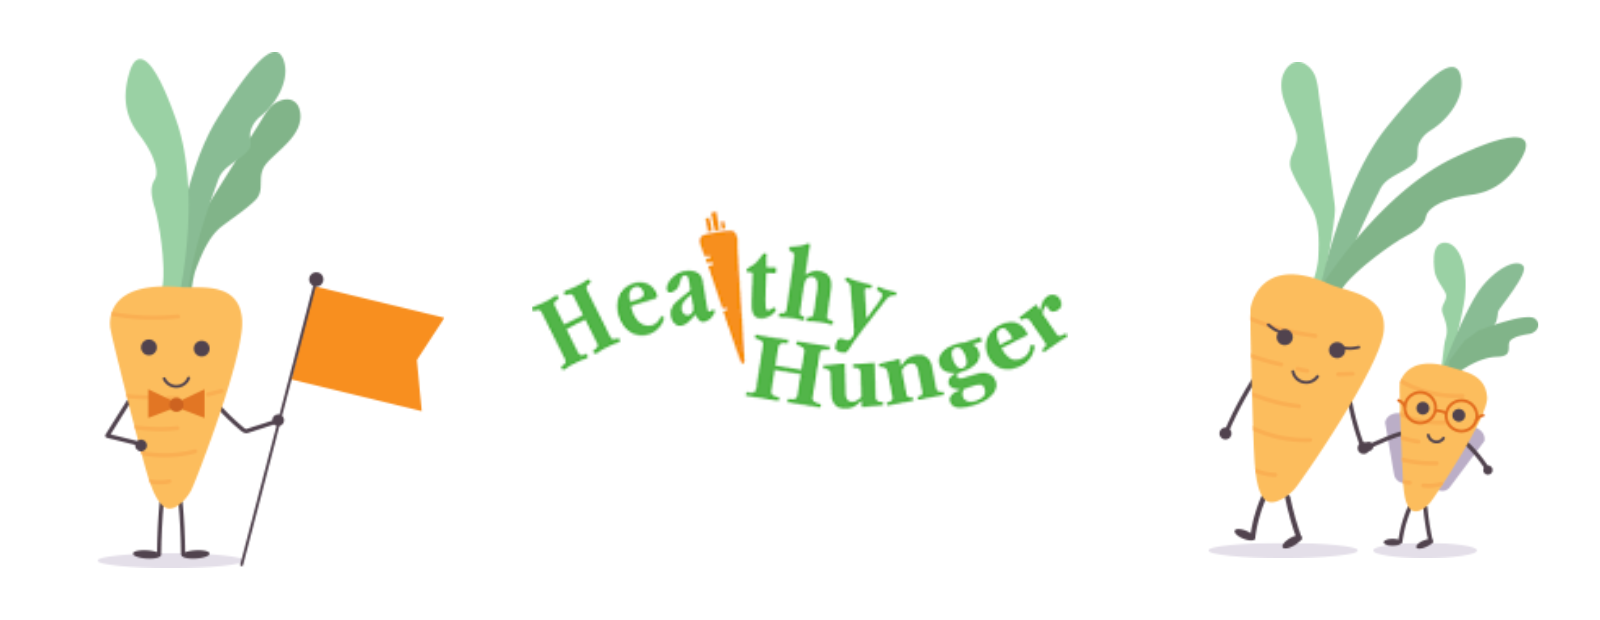 Healthy Hunger logo